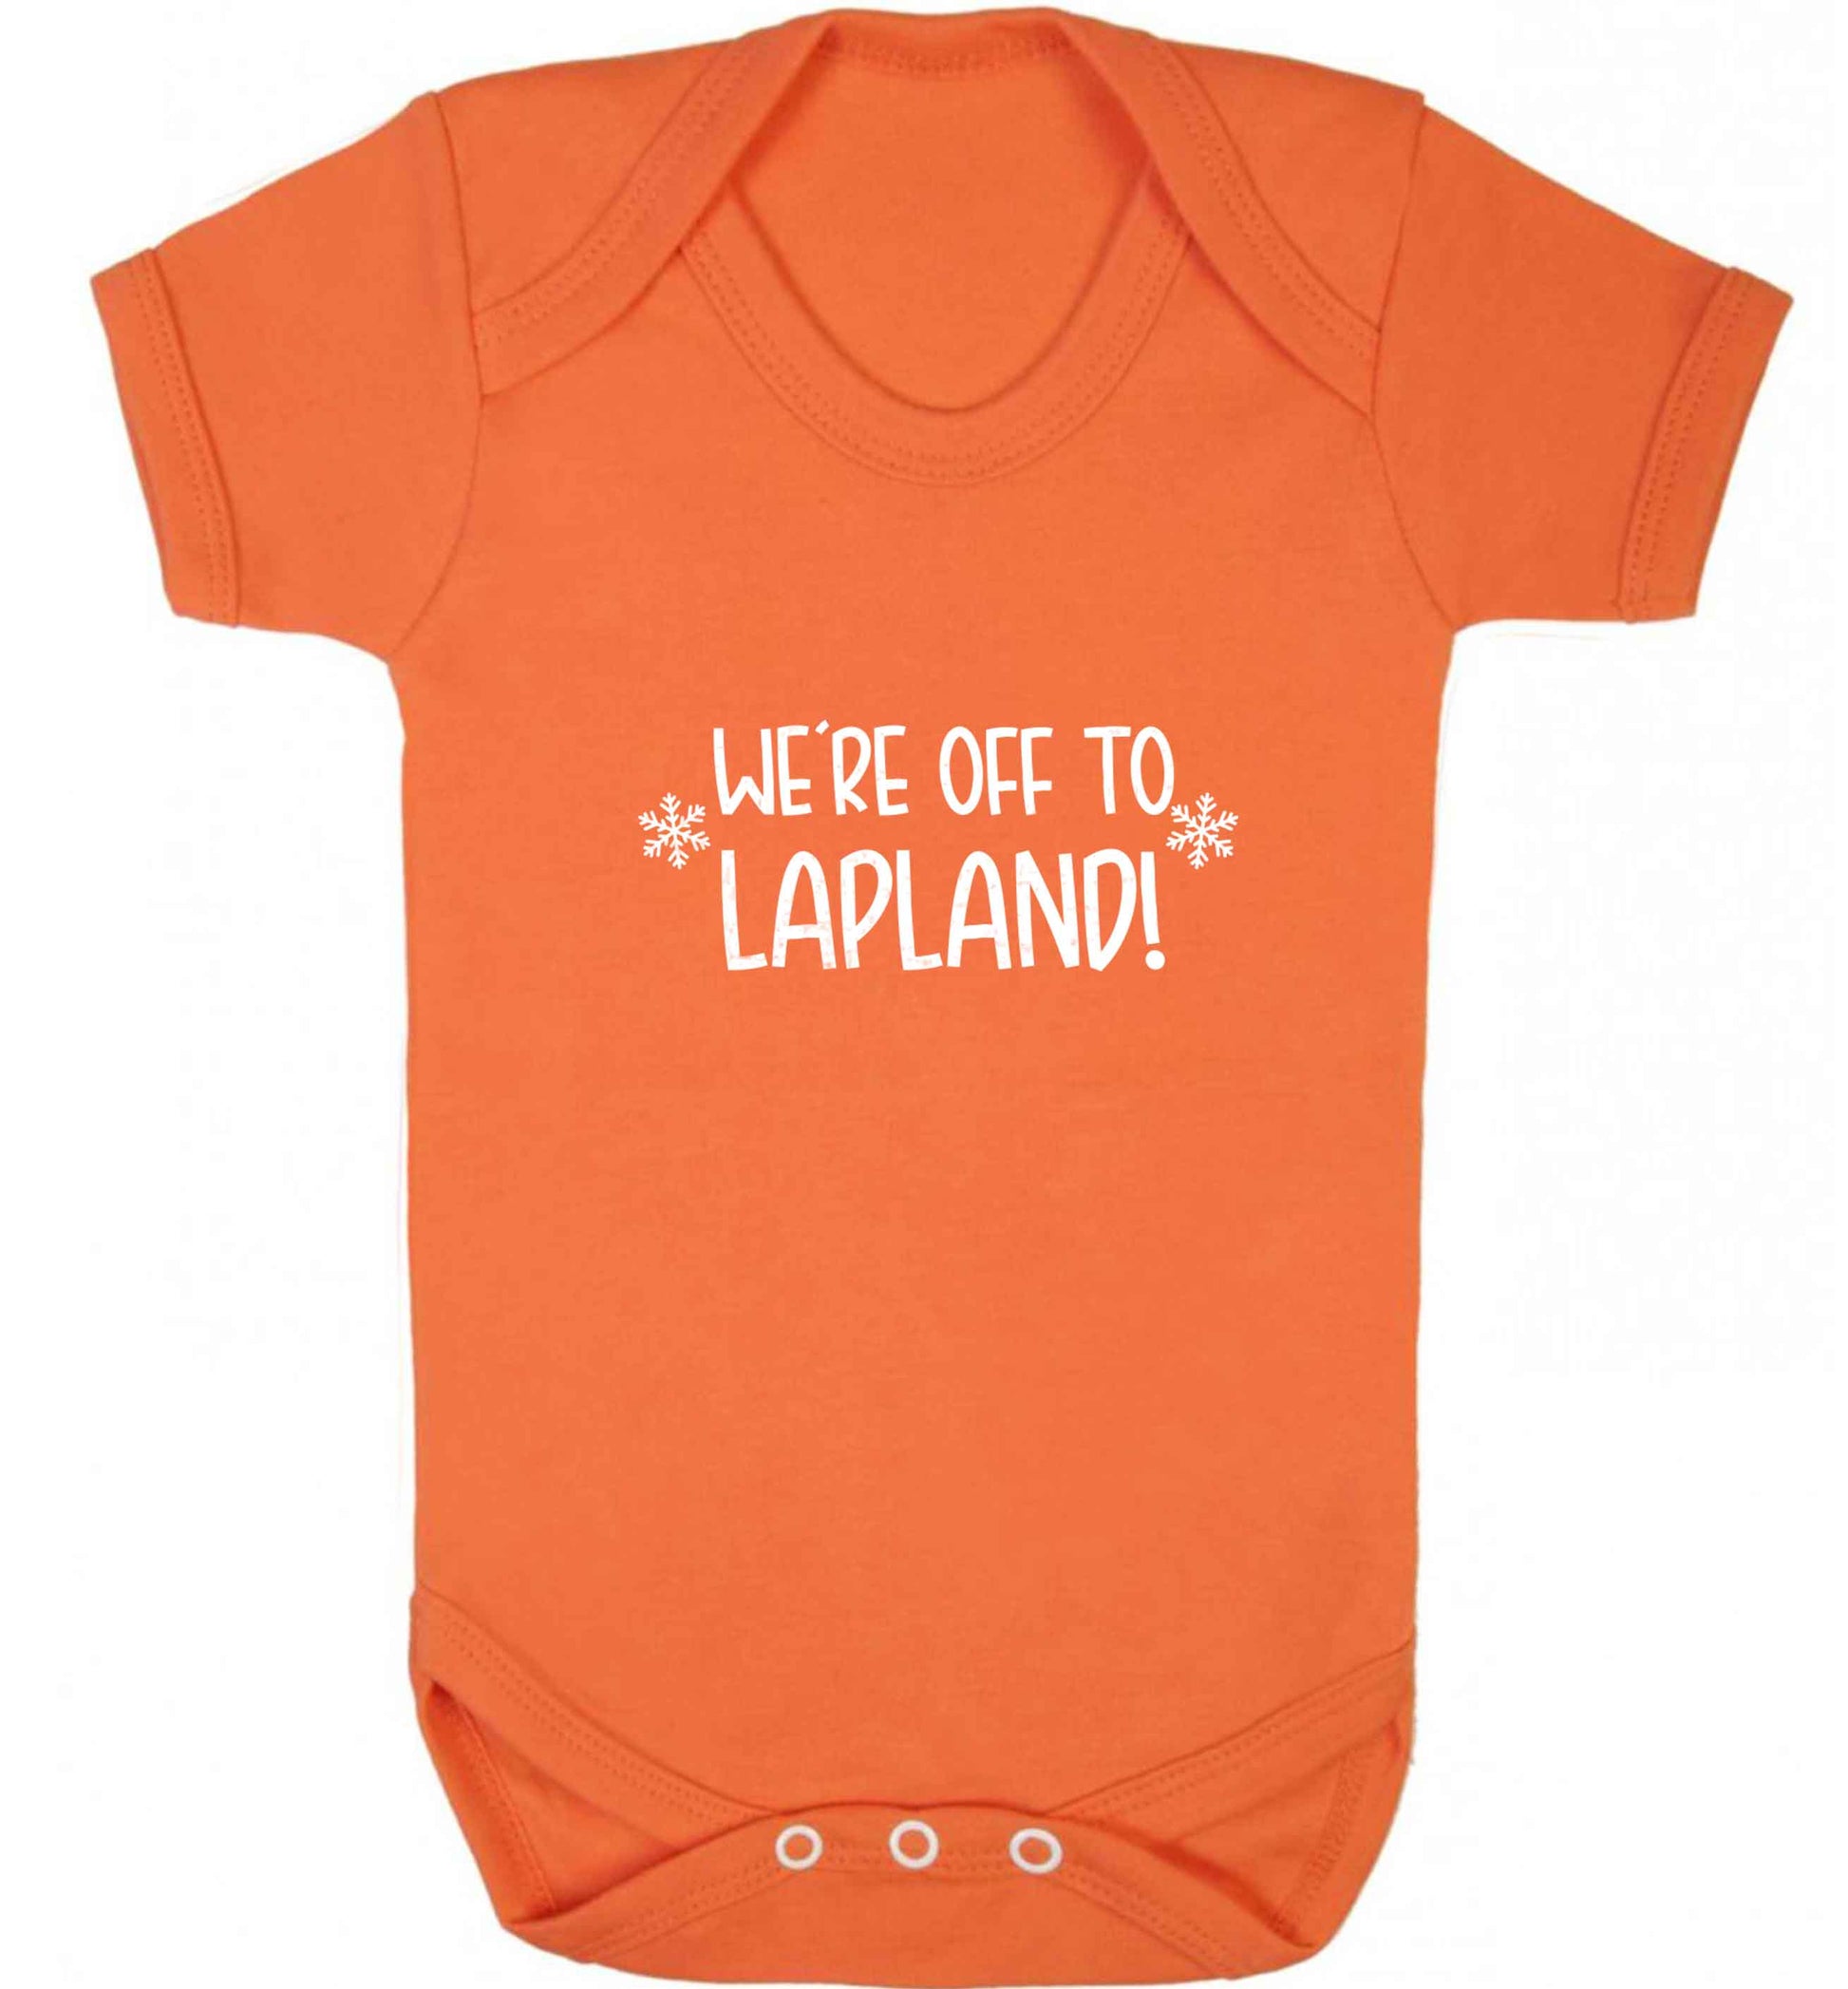 We're off to Lapland baby vest orange 18-24 months